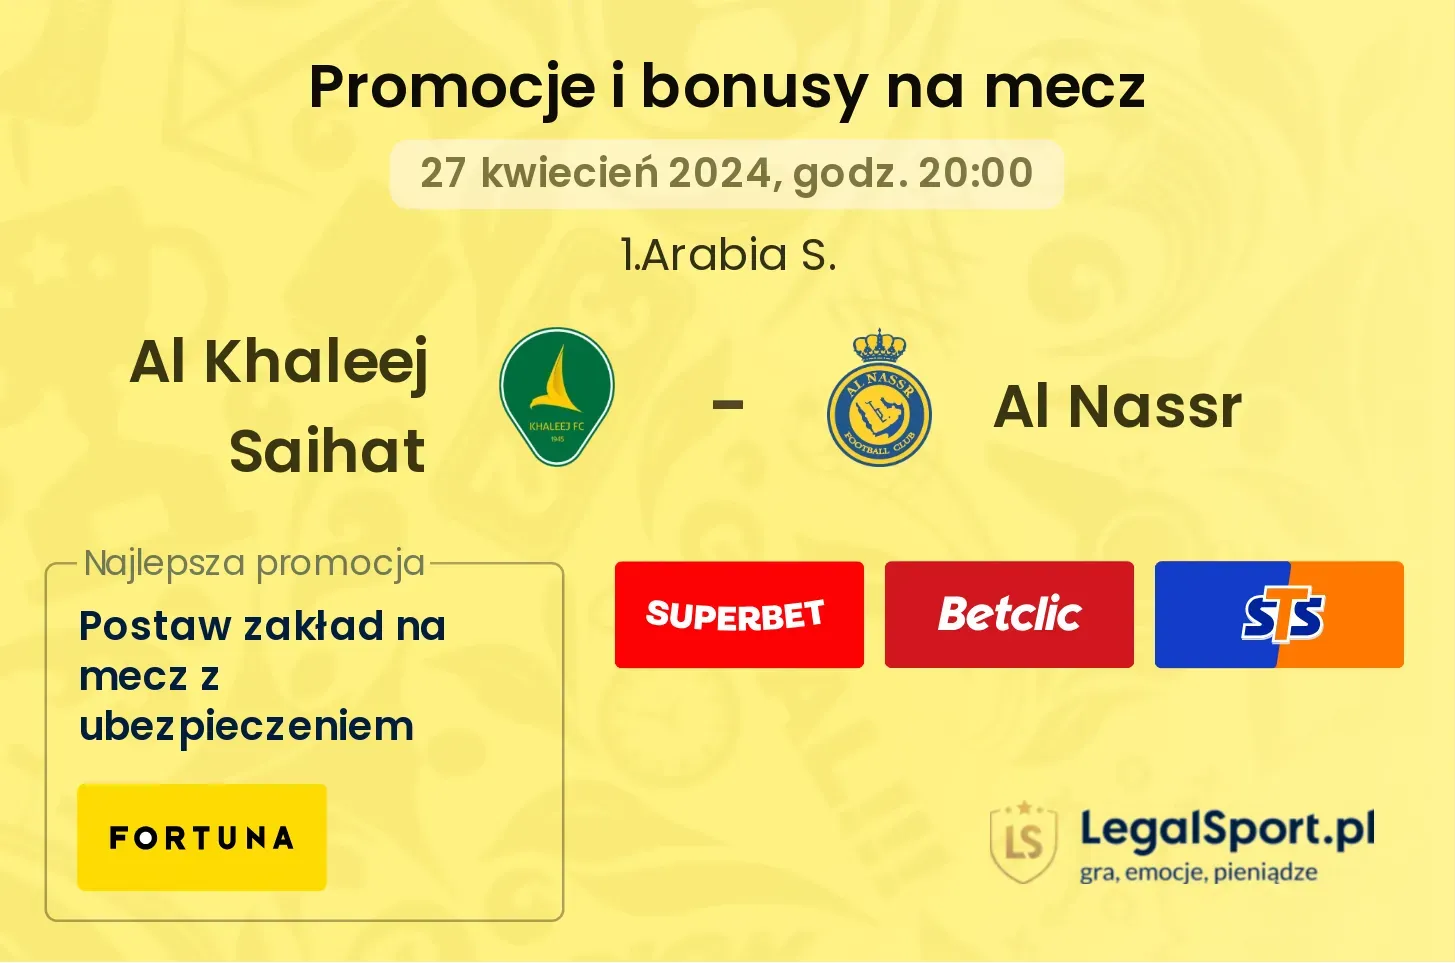 Al Khaleej Saihat - Al Nassr promocje bonusy na mecz